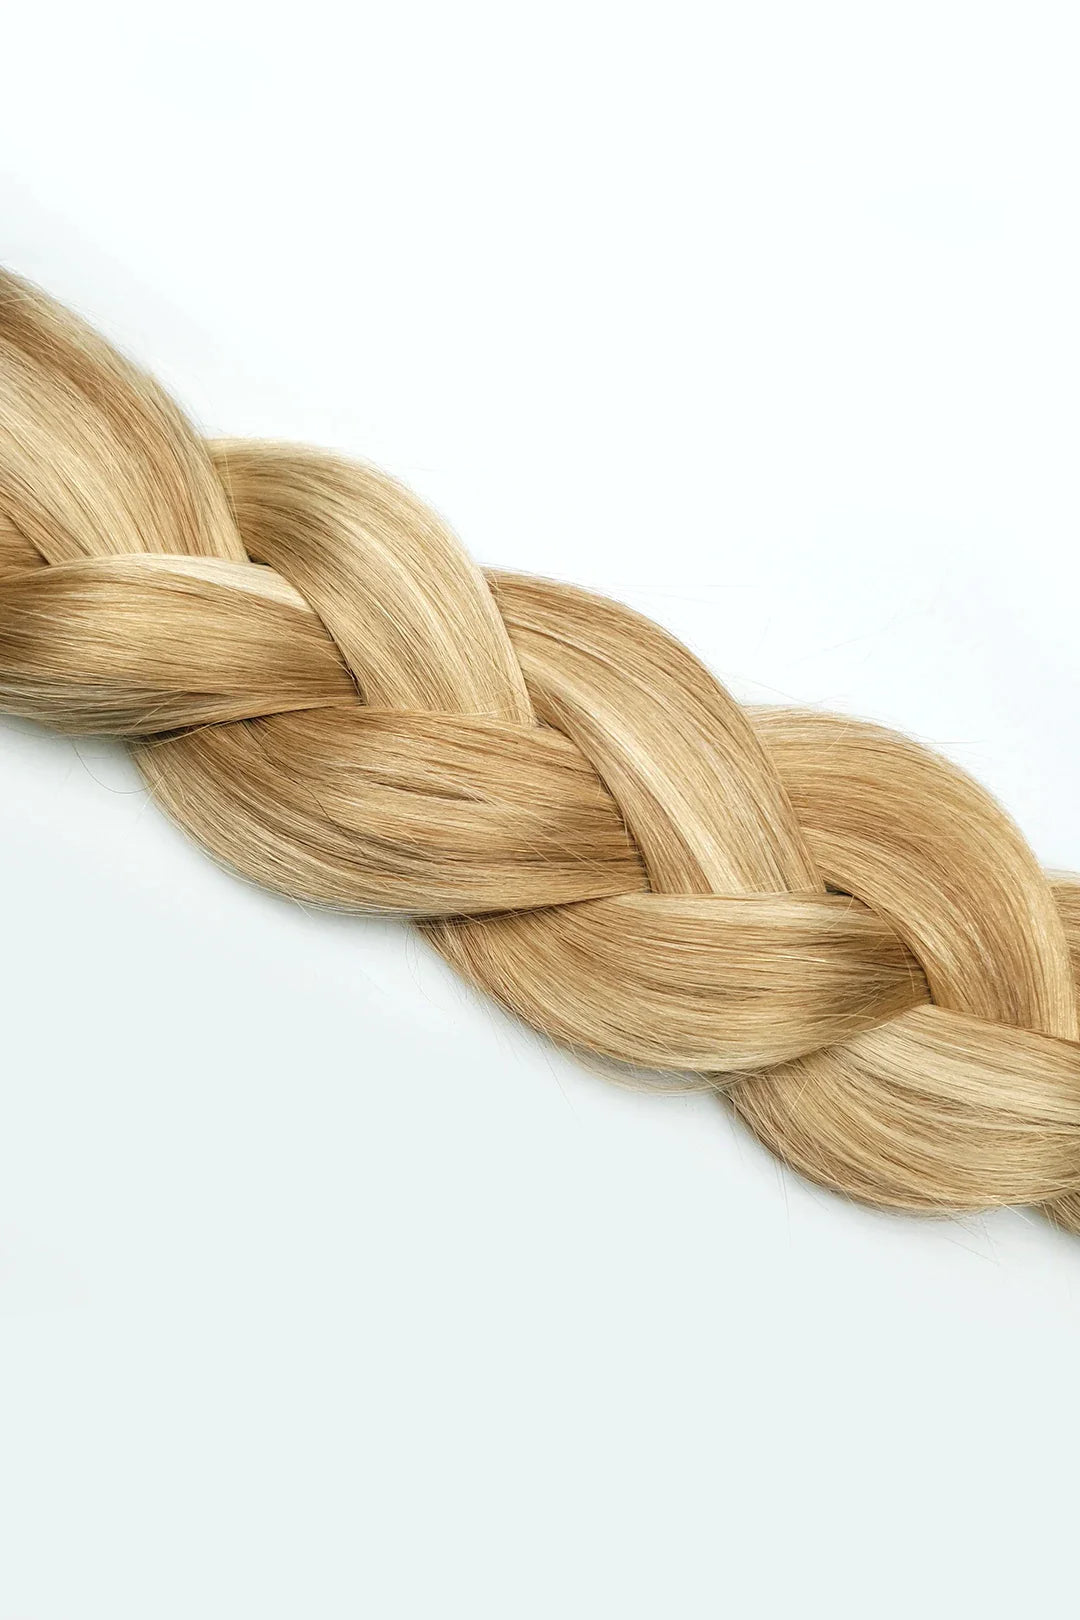 Licht blonde highlights clip-in hairextensions ☀️ 40cm - 260g